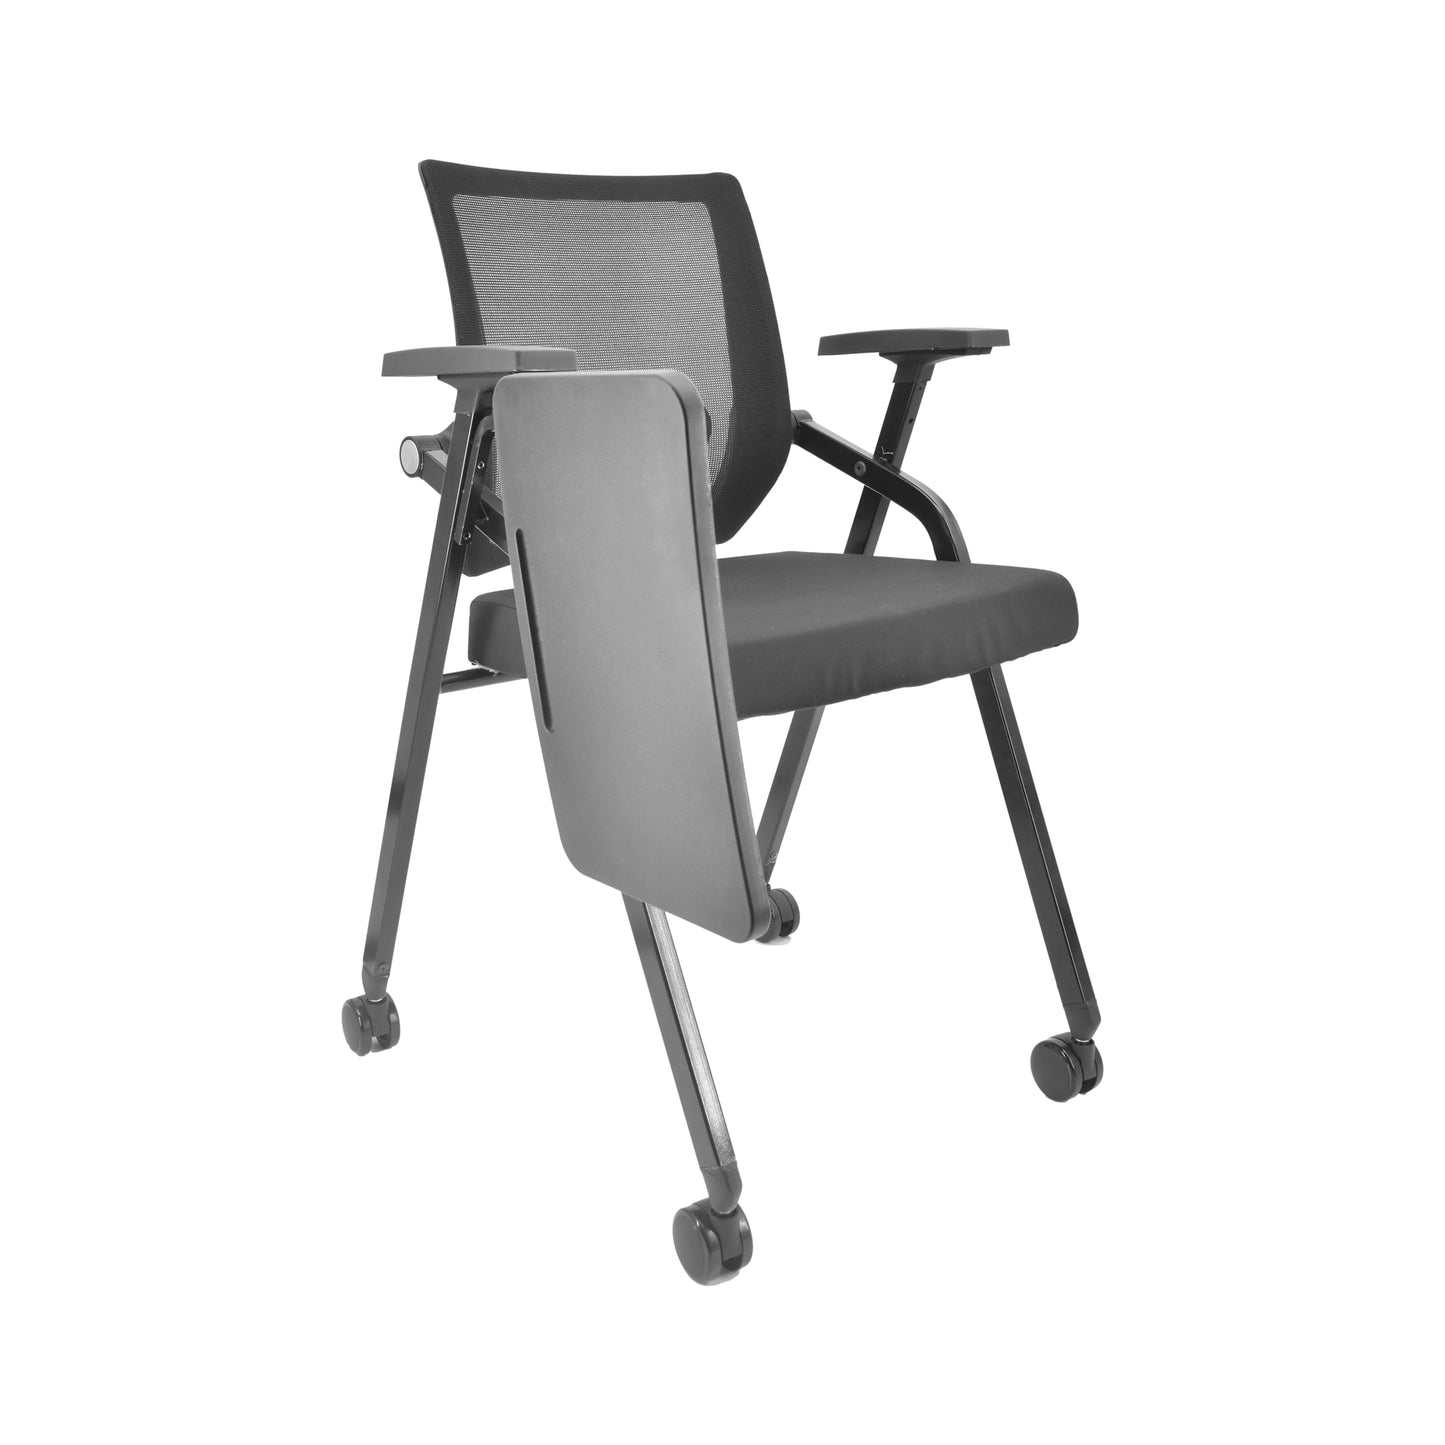 AATSO Training Chair Training Chairs - makemychairs